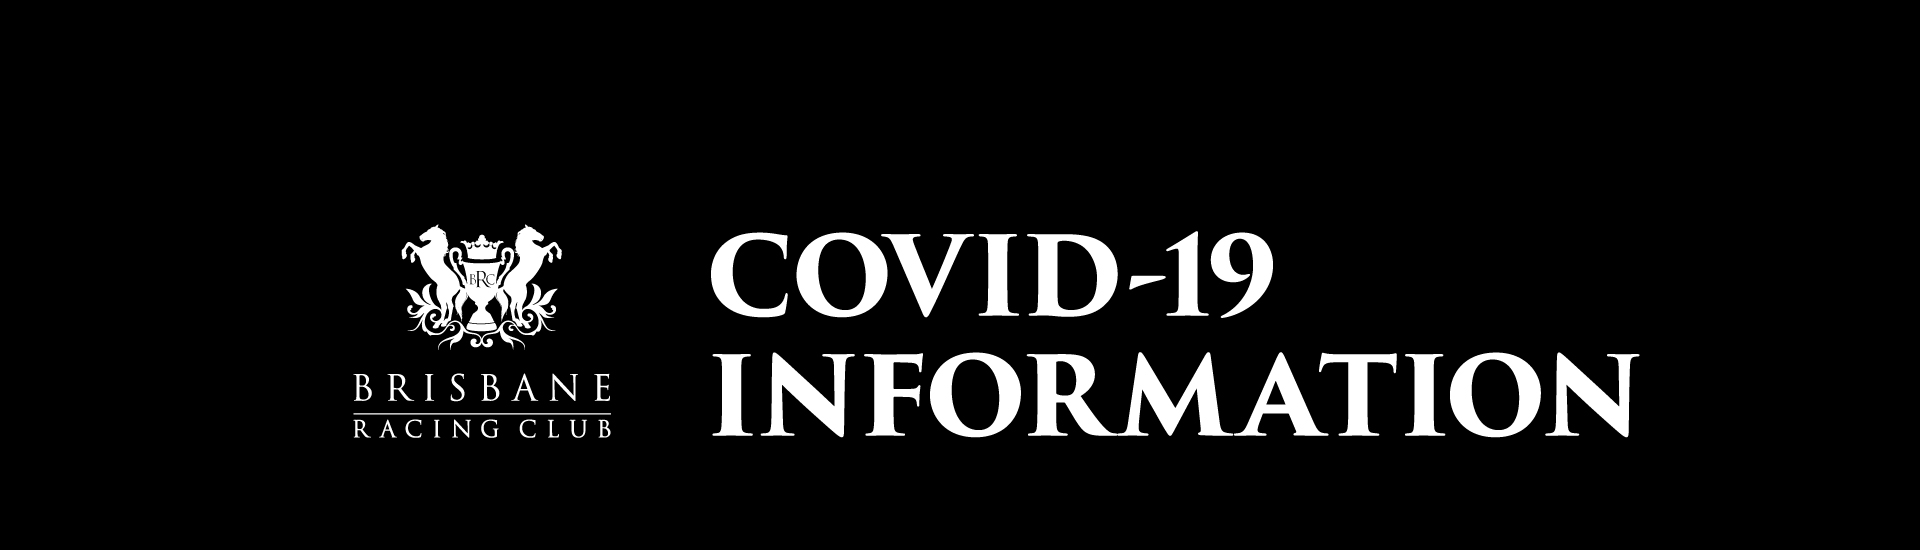 Covid19-Info_Website-Banner_1920x550 | Brisbane Racing Club